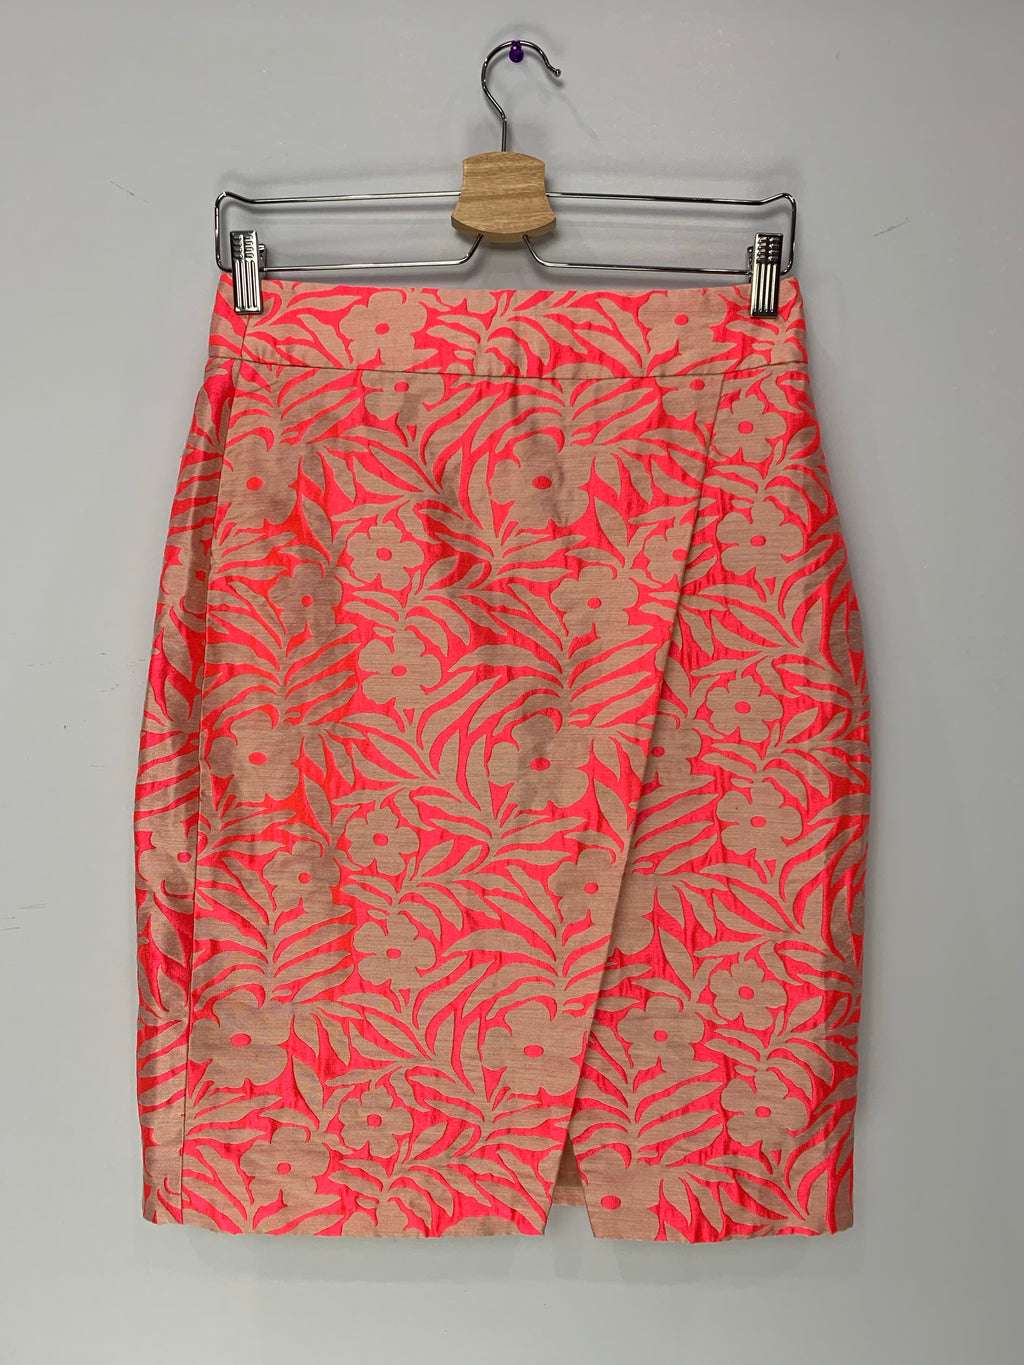 Deco Floral Skirt